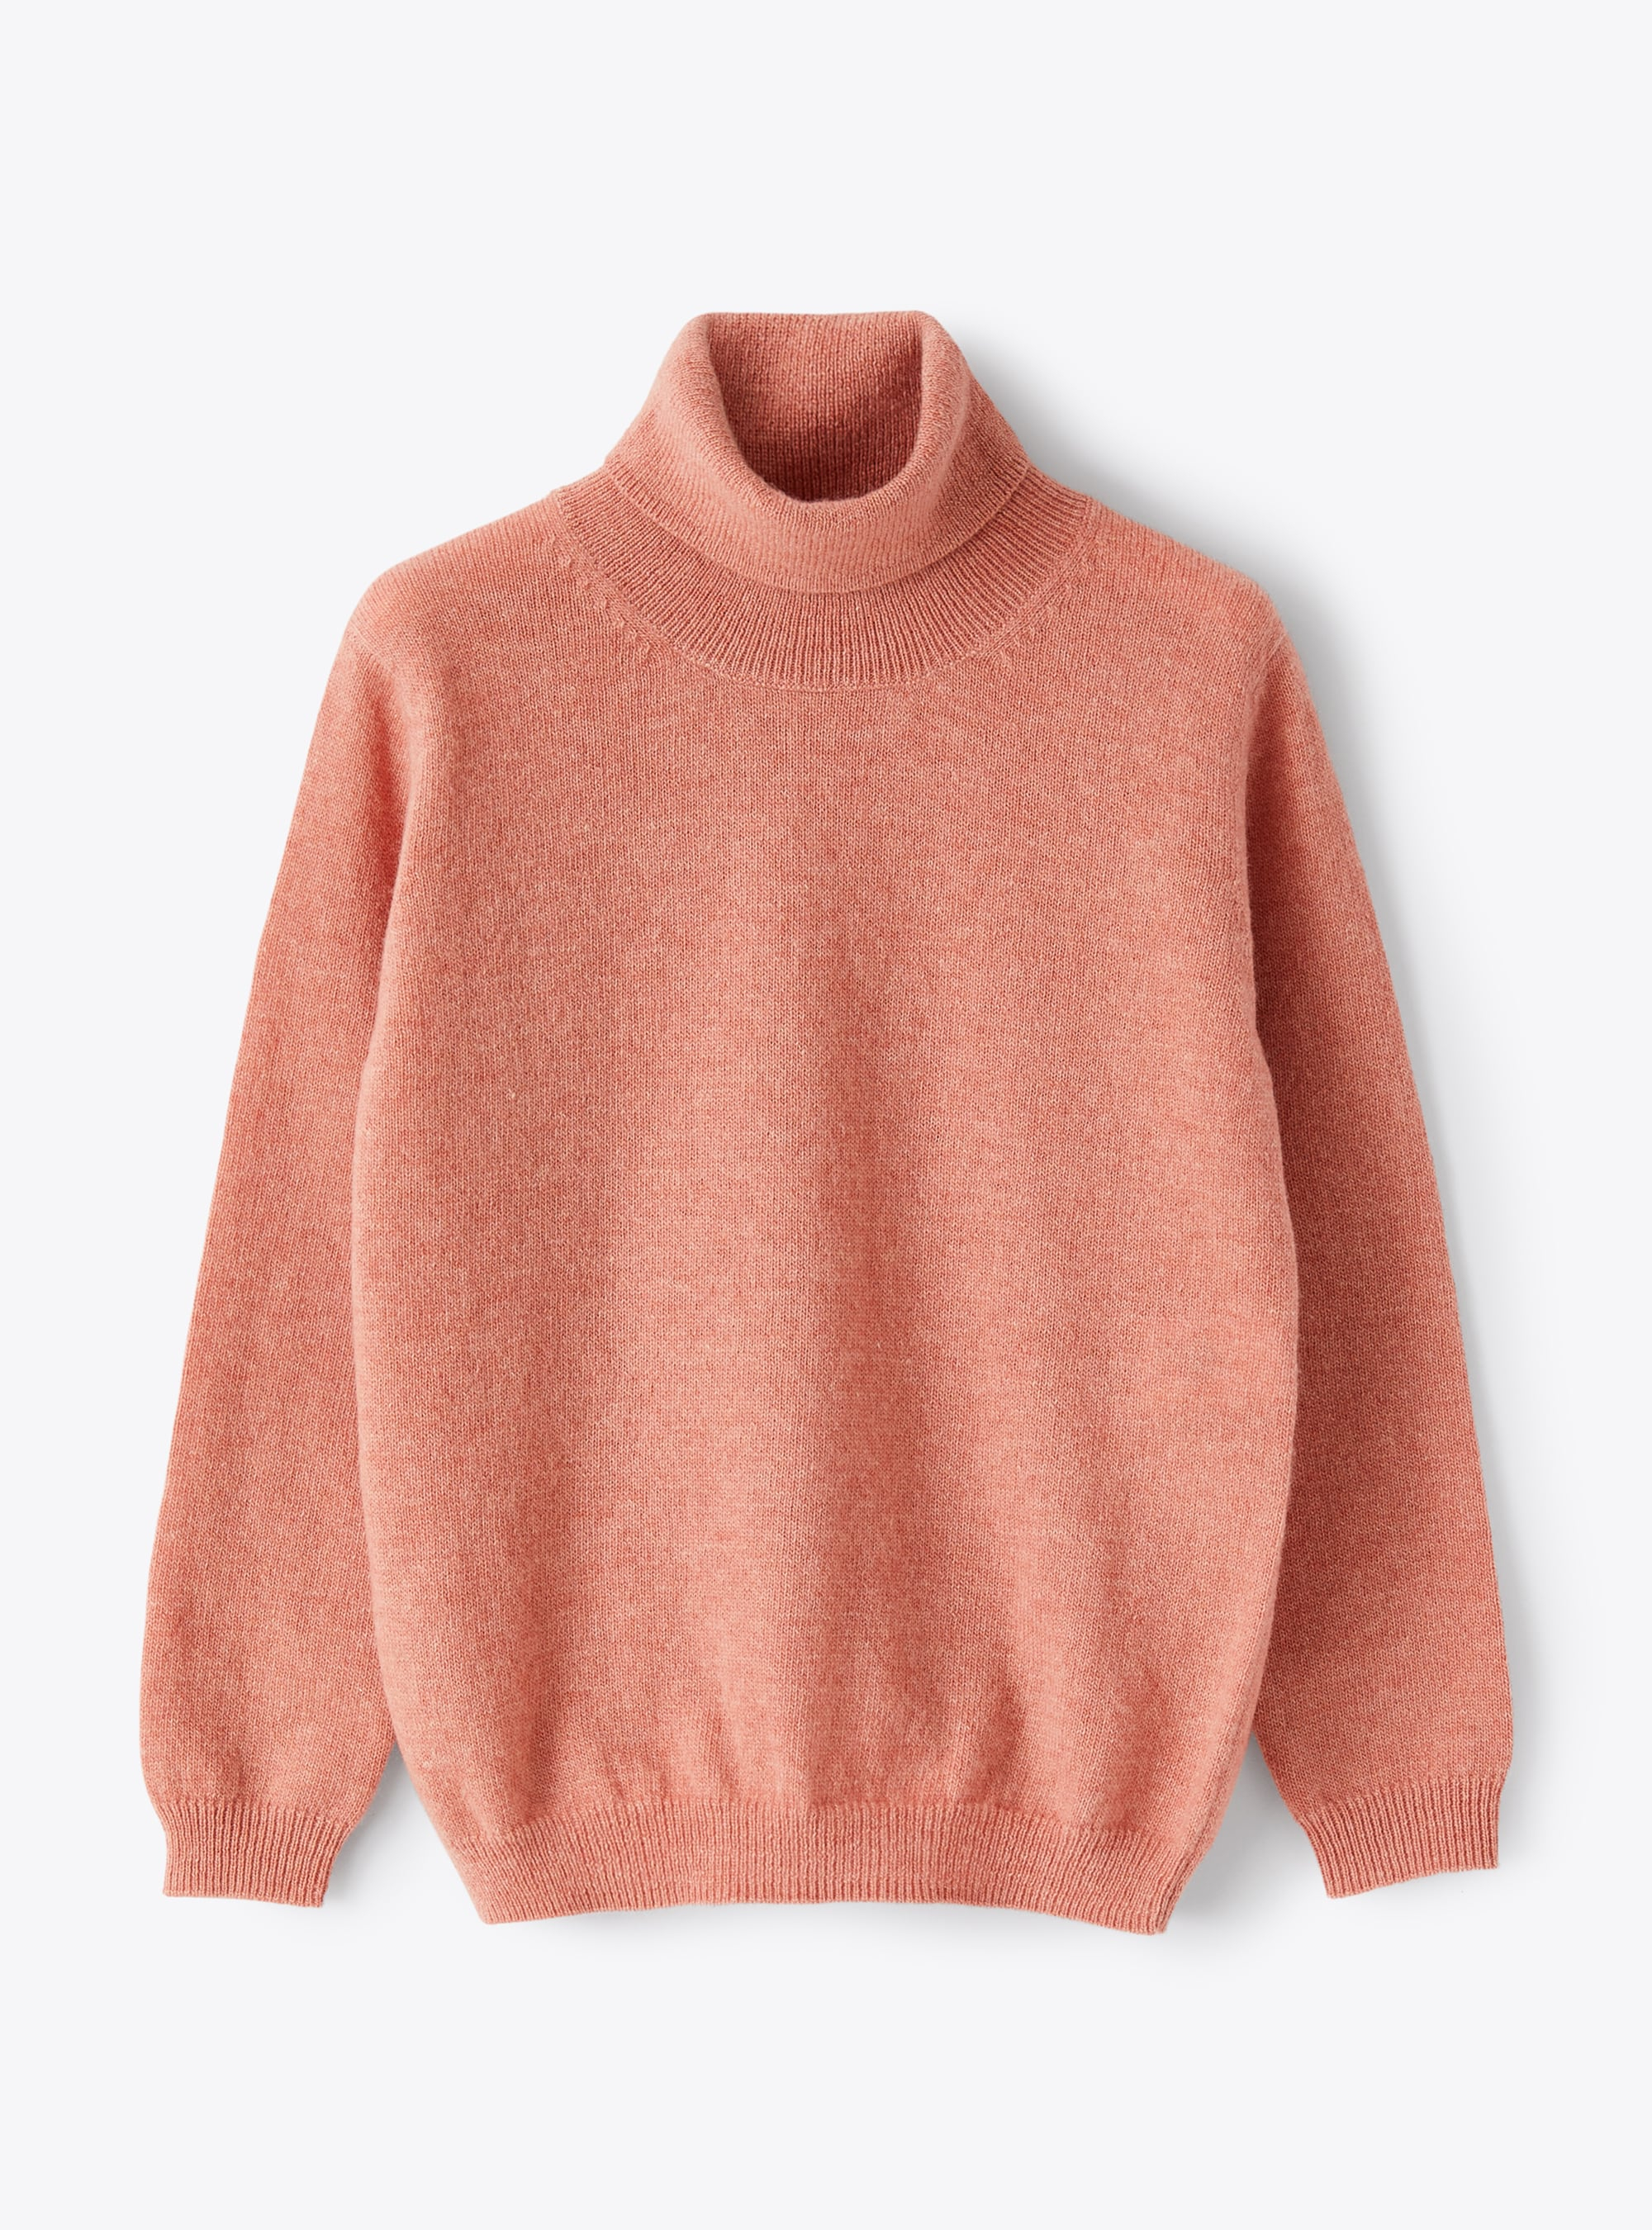 Pink merino wool turtleneck sweater - Sweaters - Il Gufo